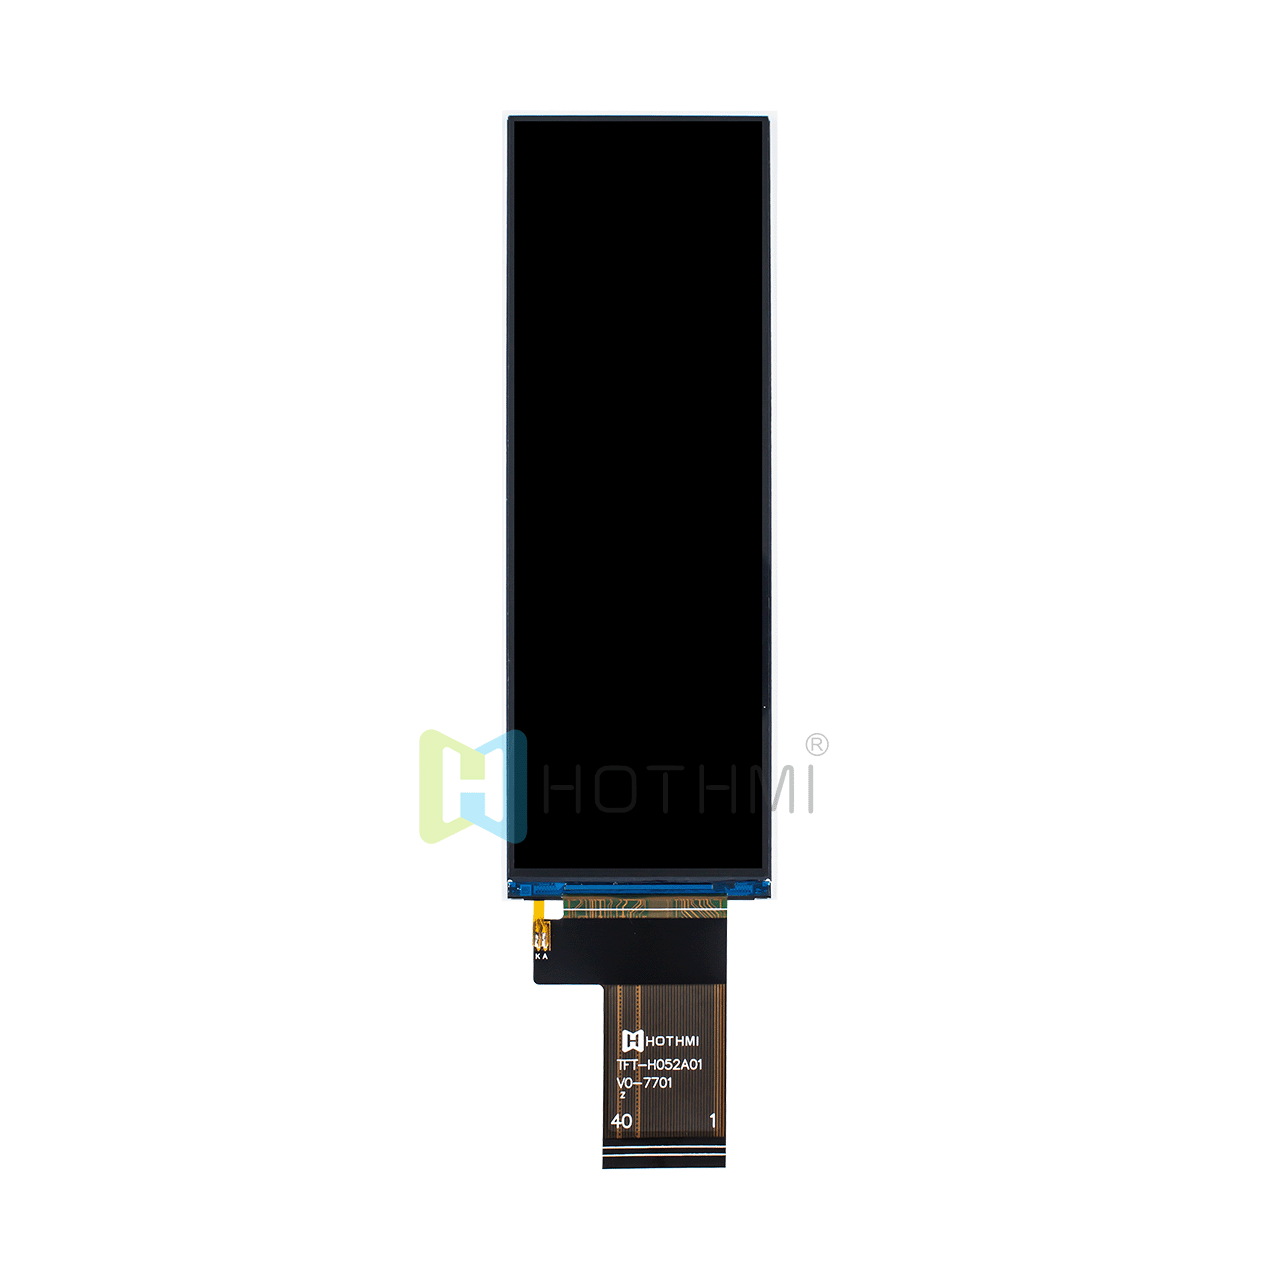 5.2-inch strip TFT LCD module/IPS full viewing angle/416x1280 dot matrix/RGB interface/NV3049F/readable under sunlight